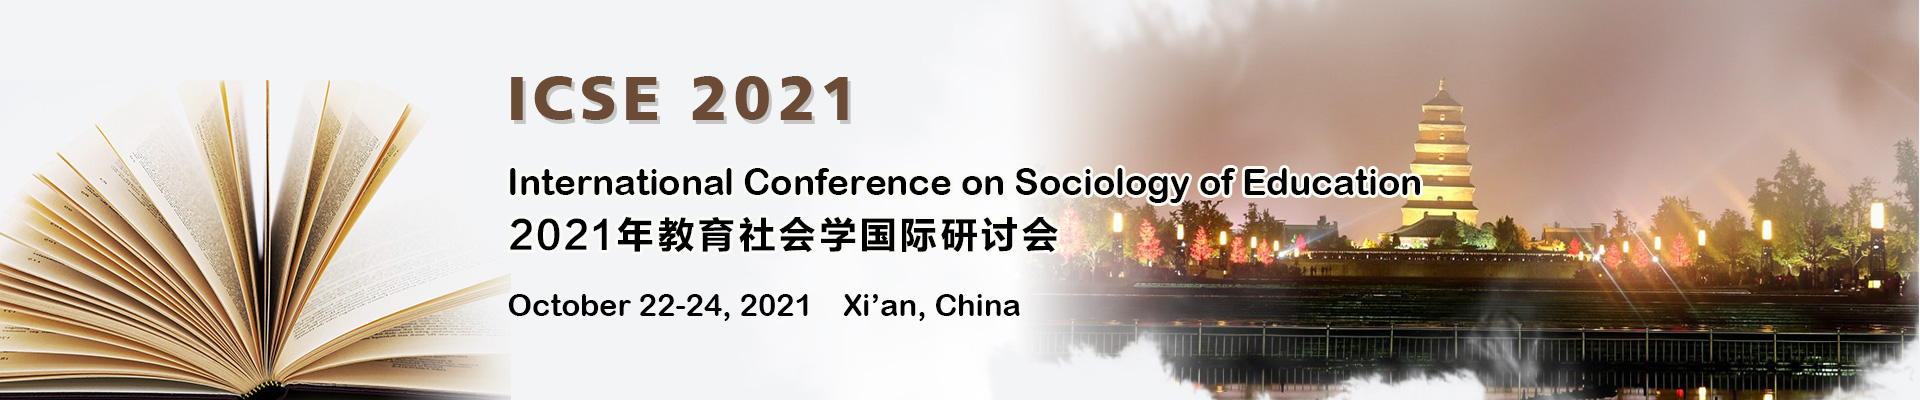 International Conference on Sociology of Education（ICSE2021）, Xi'an, Shaanxi, China